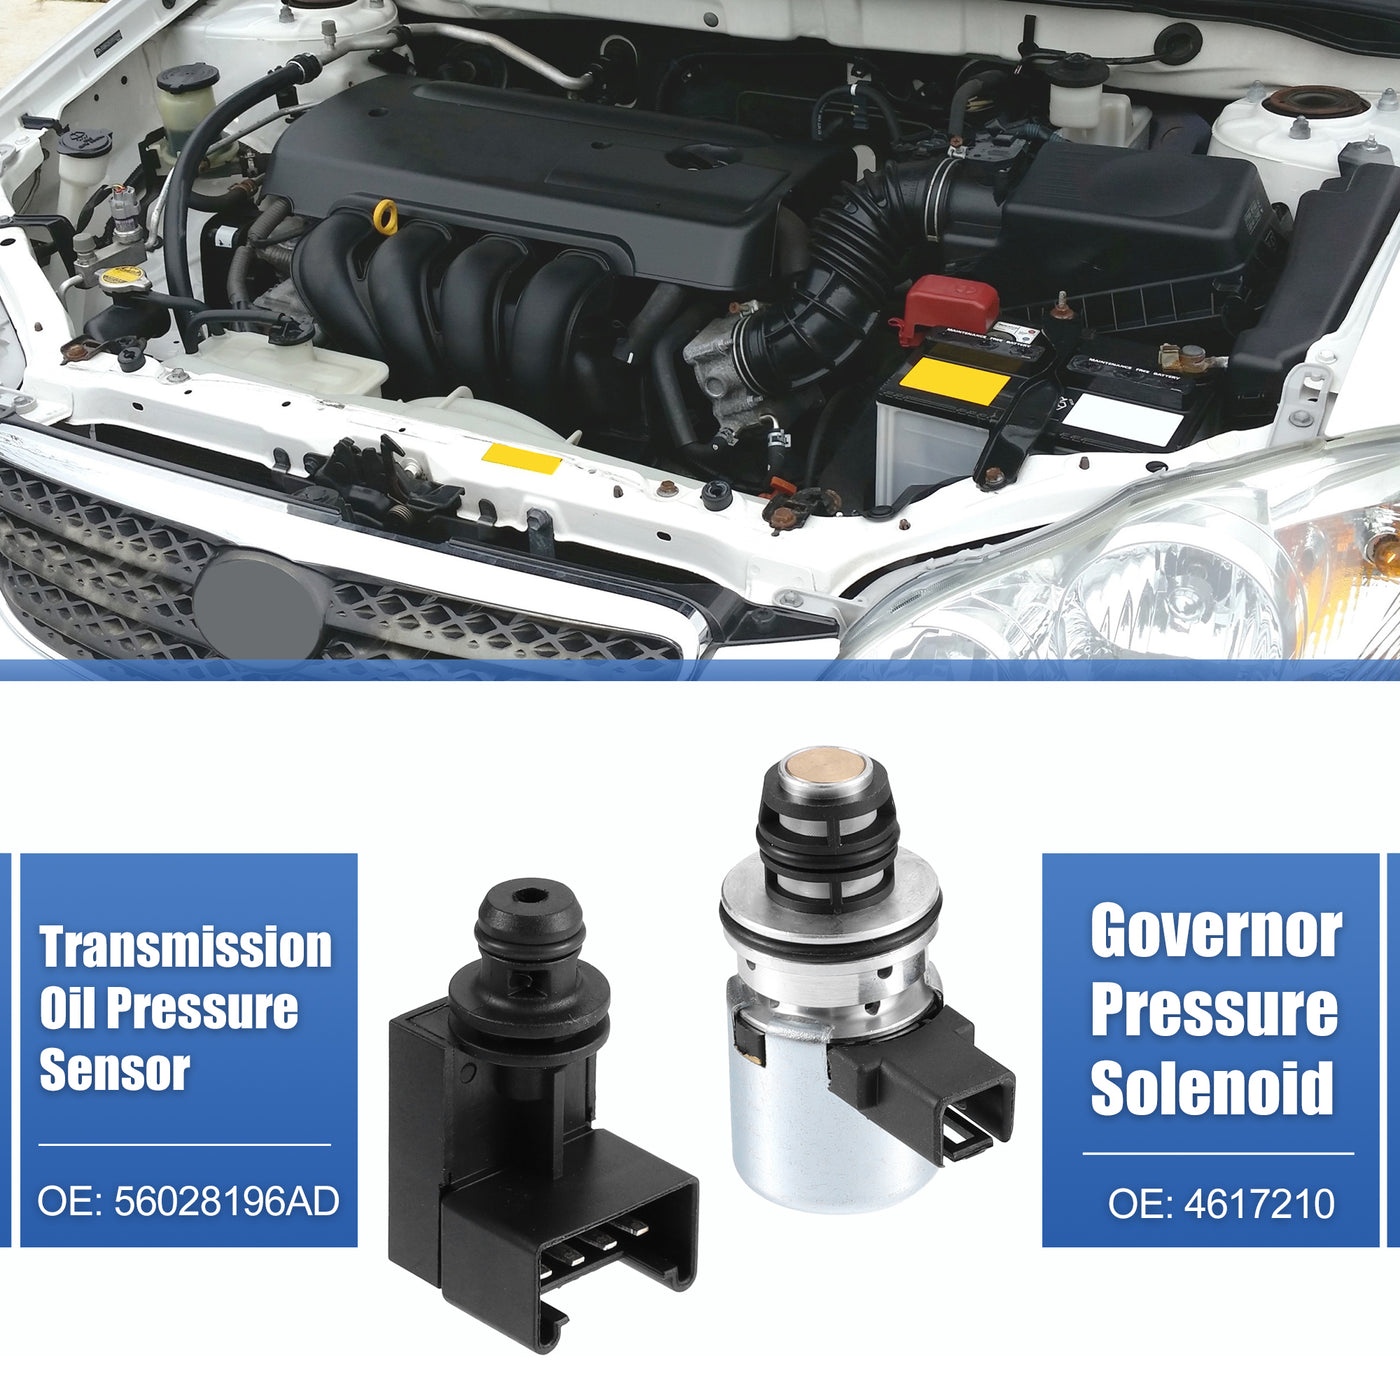 X AUTOHAUX Car Transmission Pressure Sensor Governor Pressure Solenoid Kit 4617210 56028196AD for Dodge Dakota Durango for Ram 1500 2500 3500 for Jeep